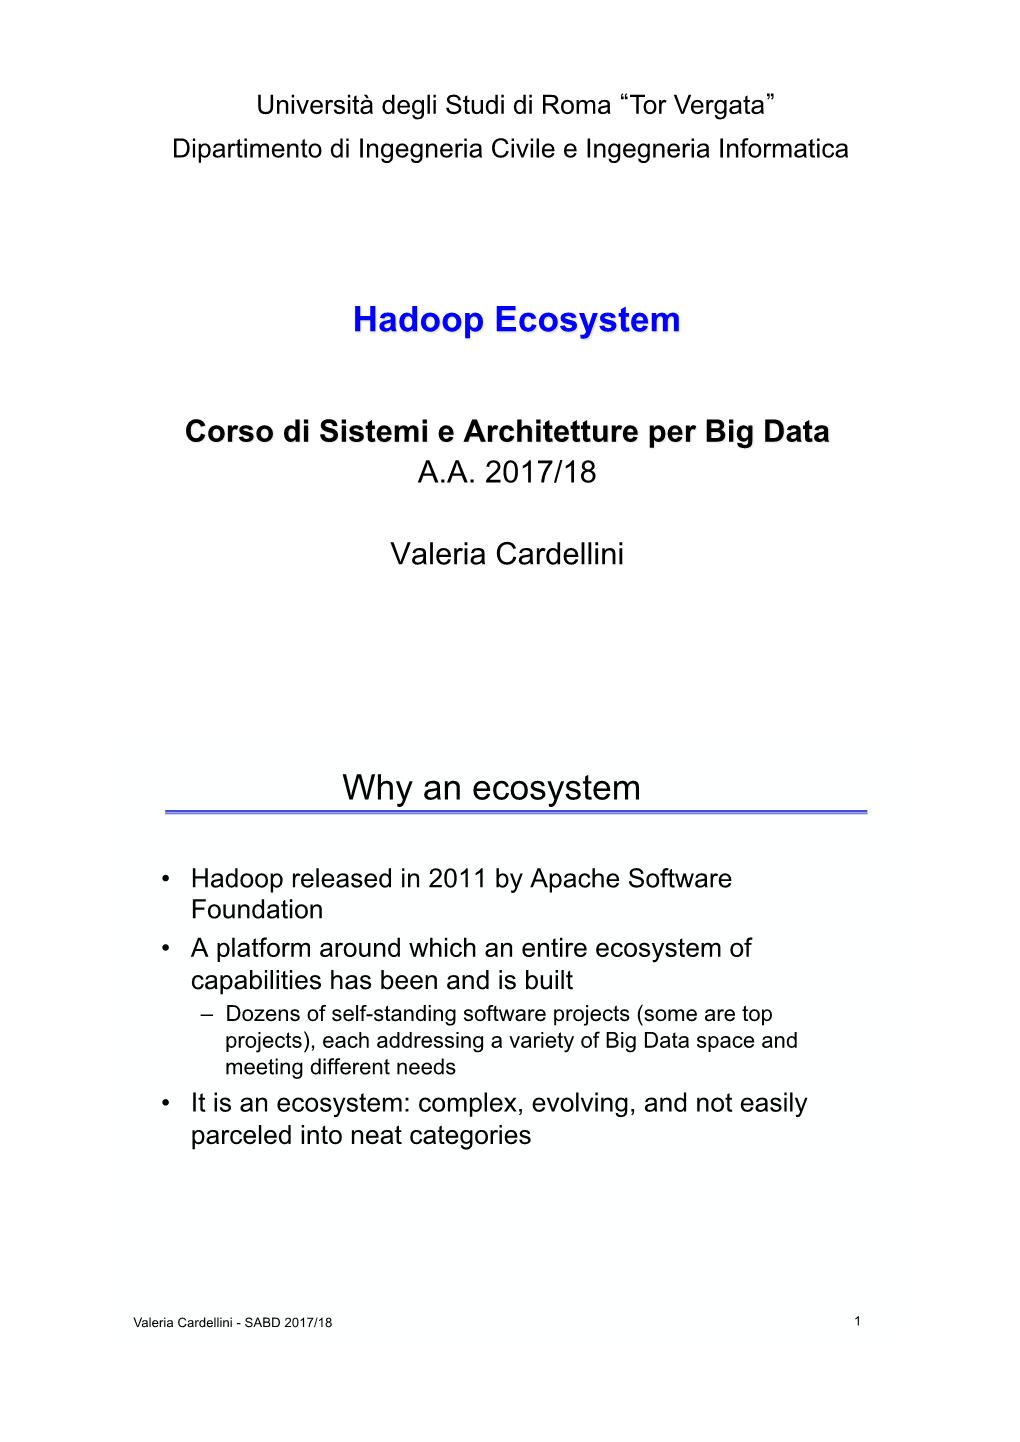 Hadoop Ecosystem Why an Ecosystem